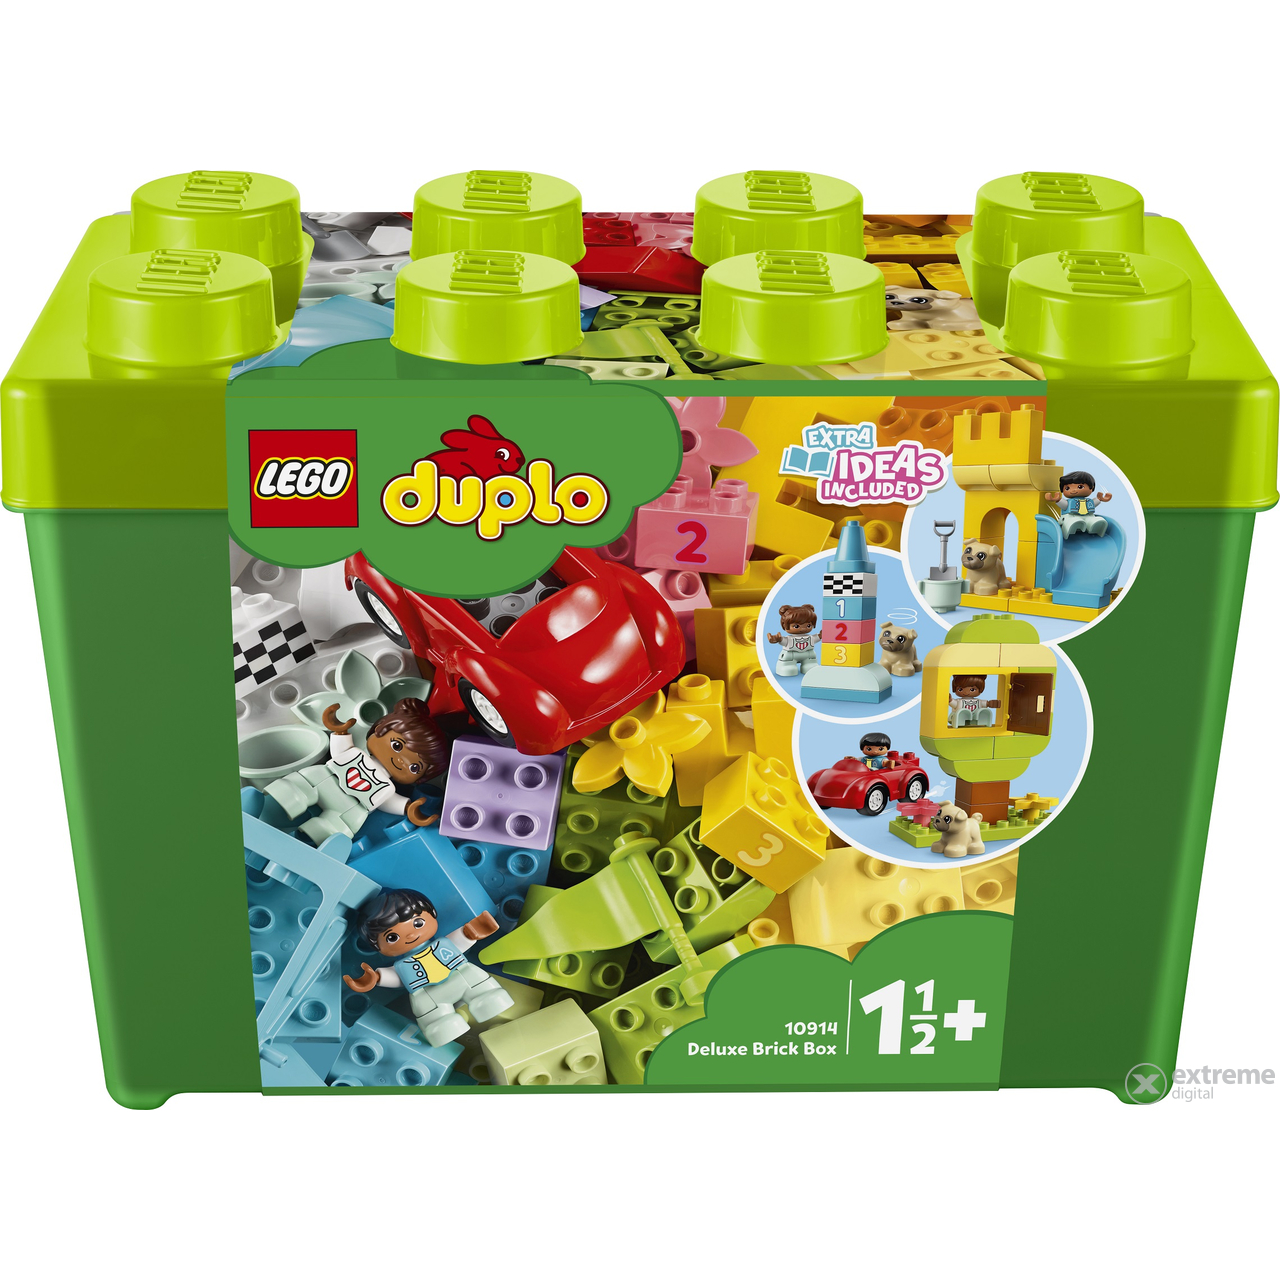 LEGO® DUPLO® Classic 10914 Deluxe kutija